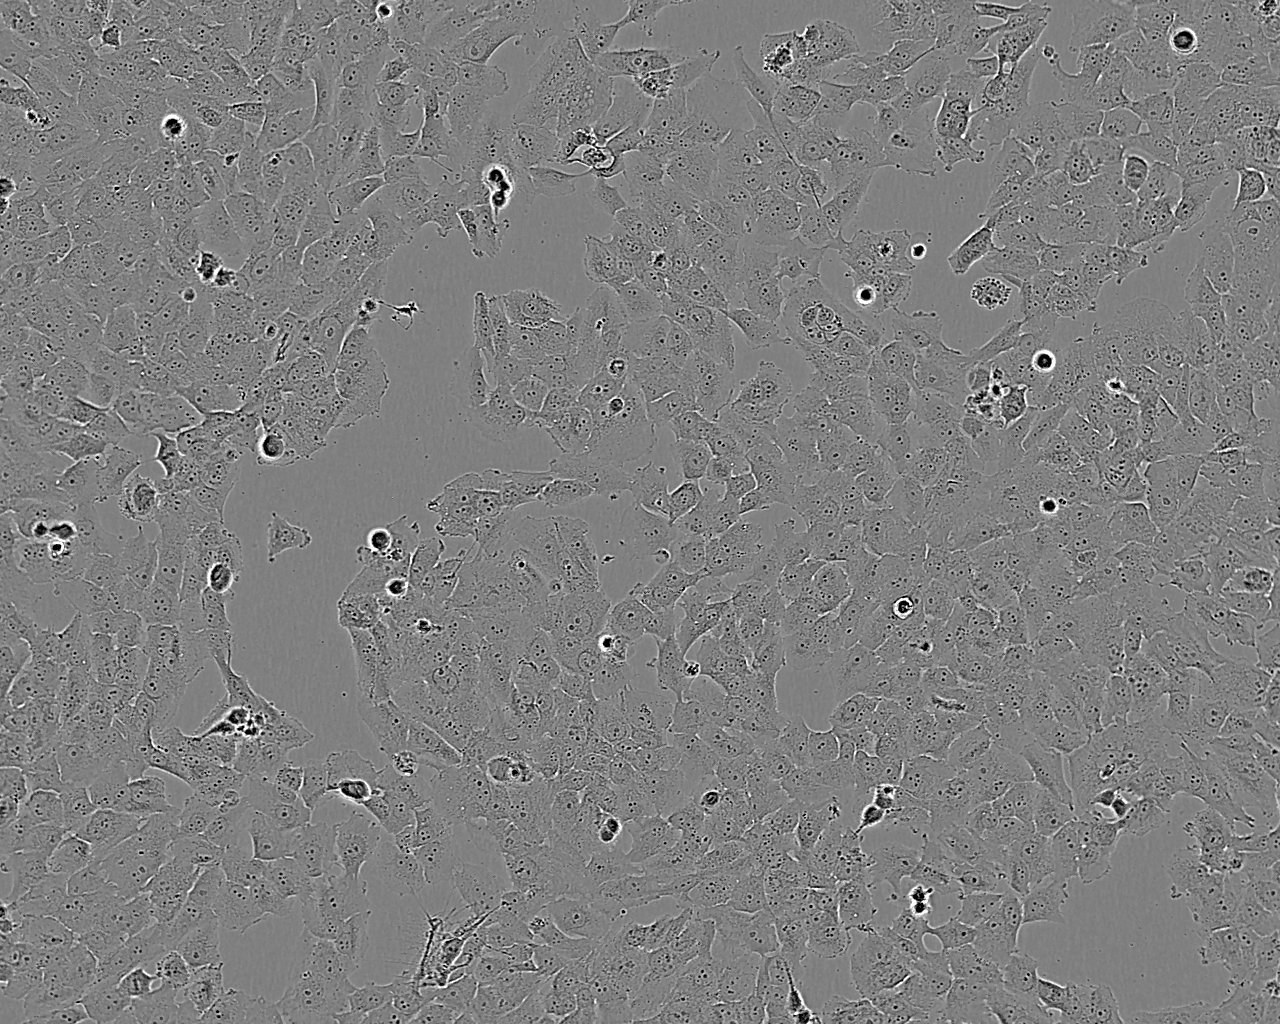 H9c2(2-1) Cell:大鼠胚胎心肌细胞系